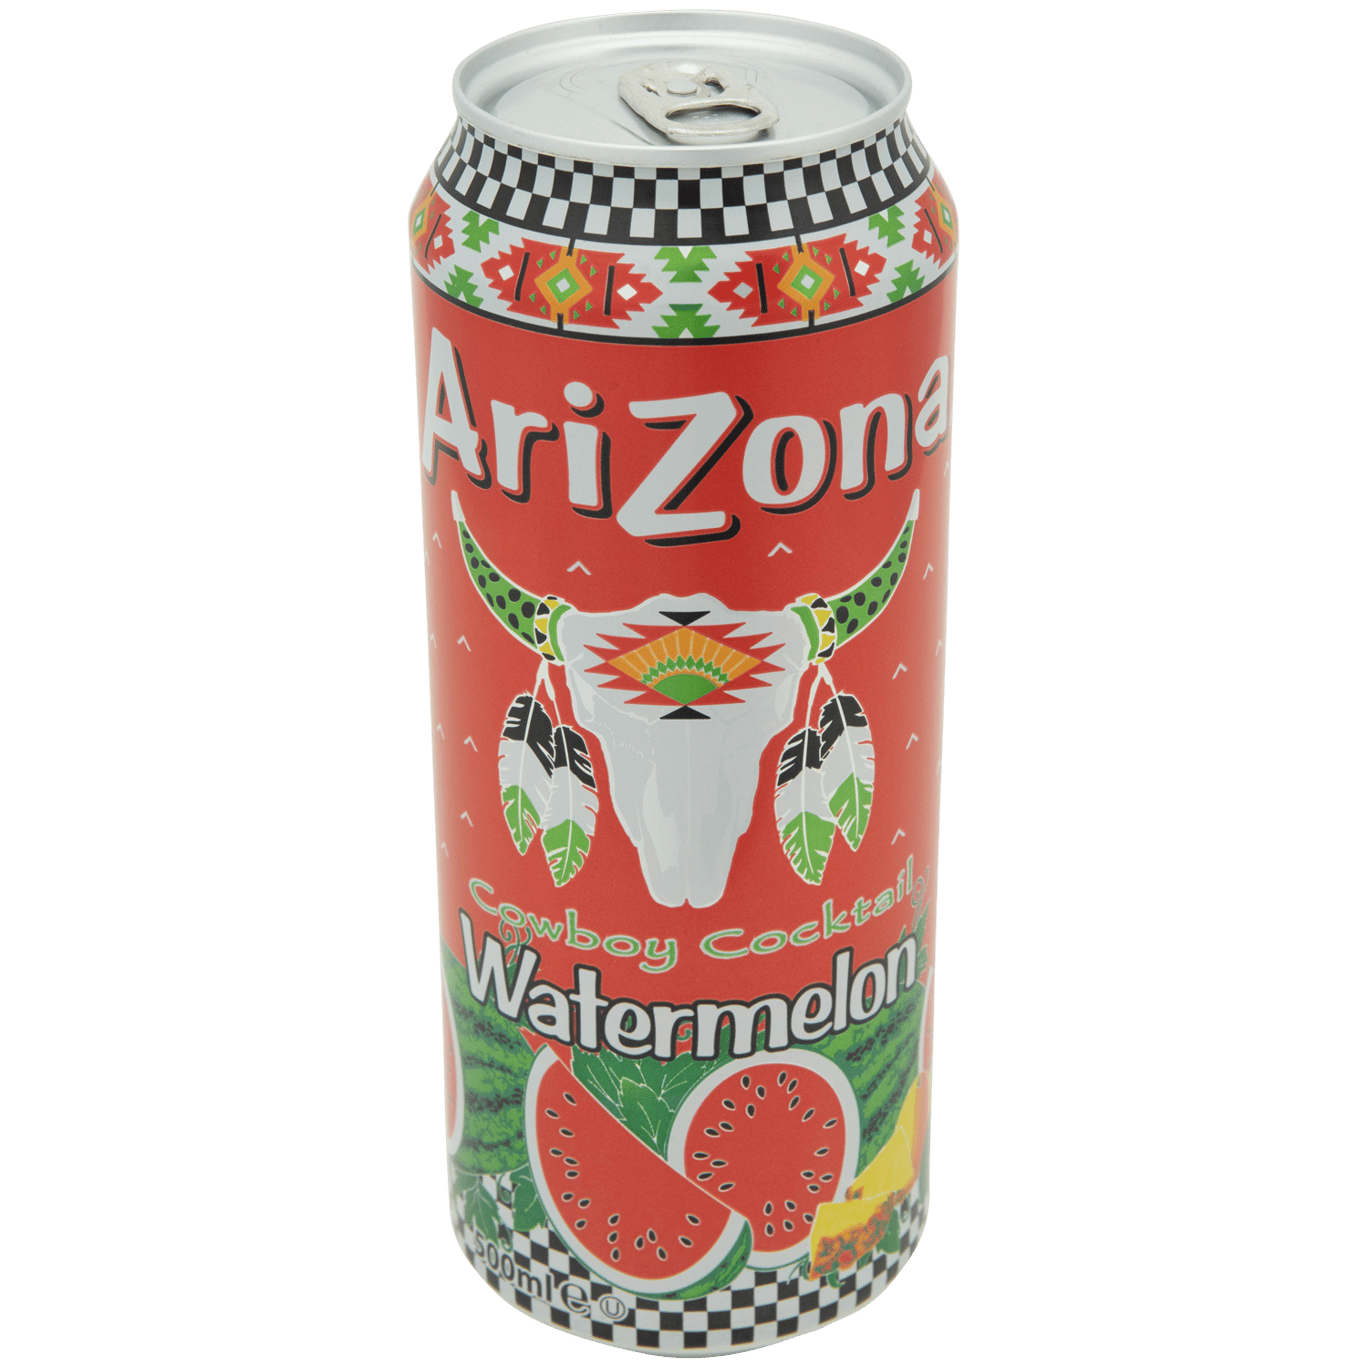 Cowboy Cocktail Arizona Watermelon